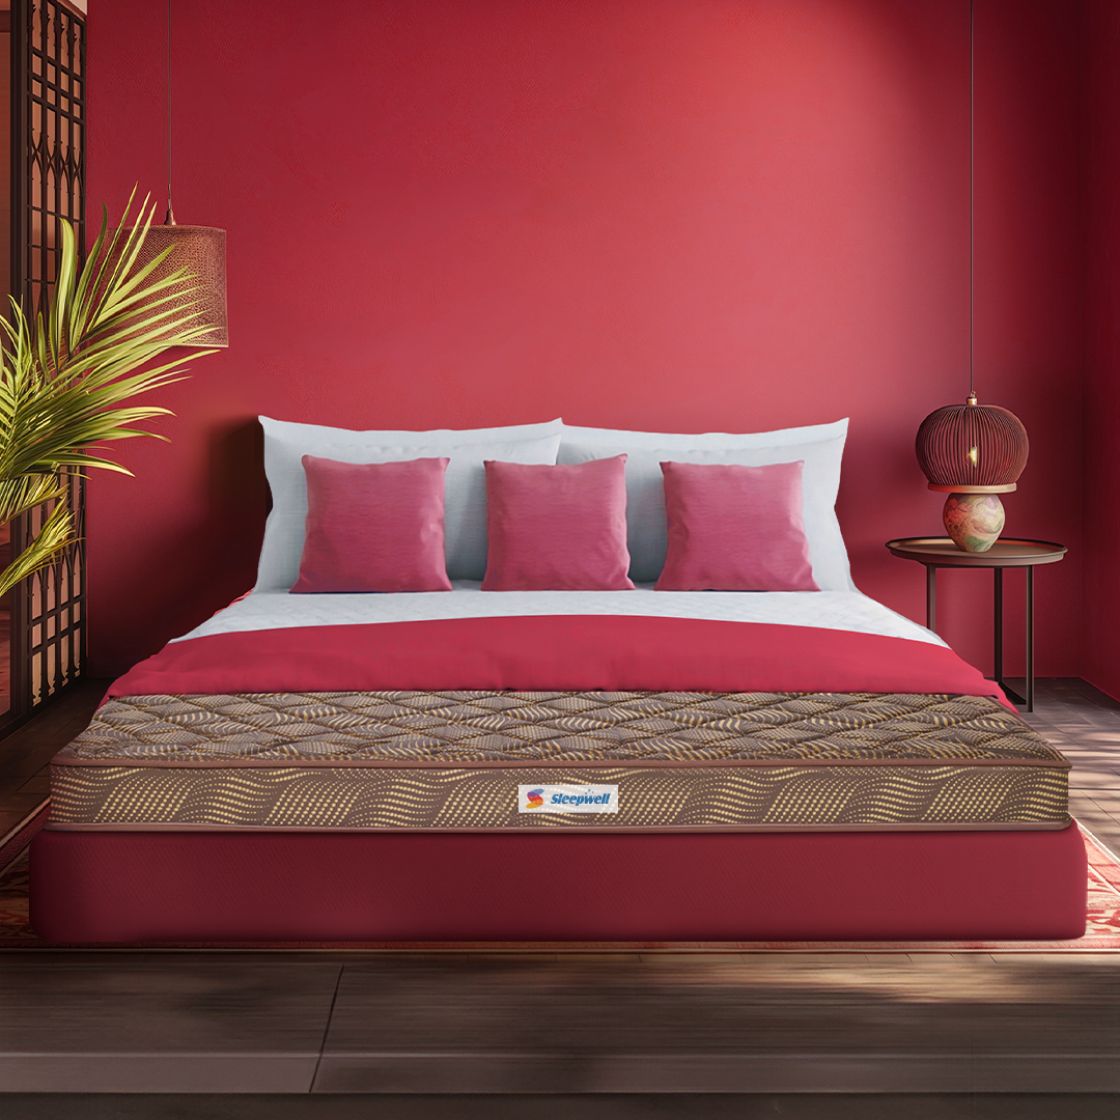 Sleepwell  Champ-Superior PU Foam | 5-inch Single Bed Size | Medium Firm | Anti Sag Tech Mattress (Brown, 72x60x5)